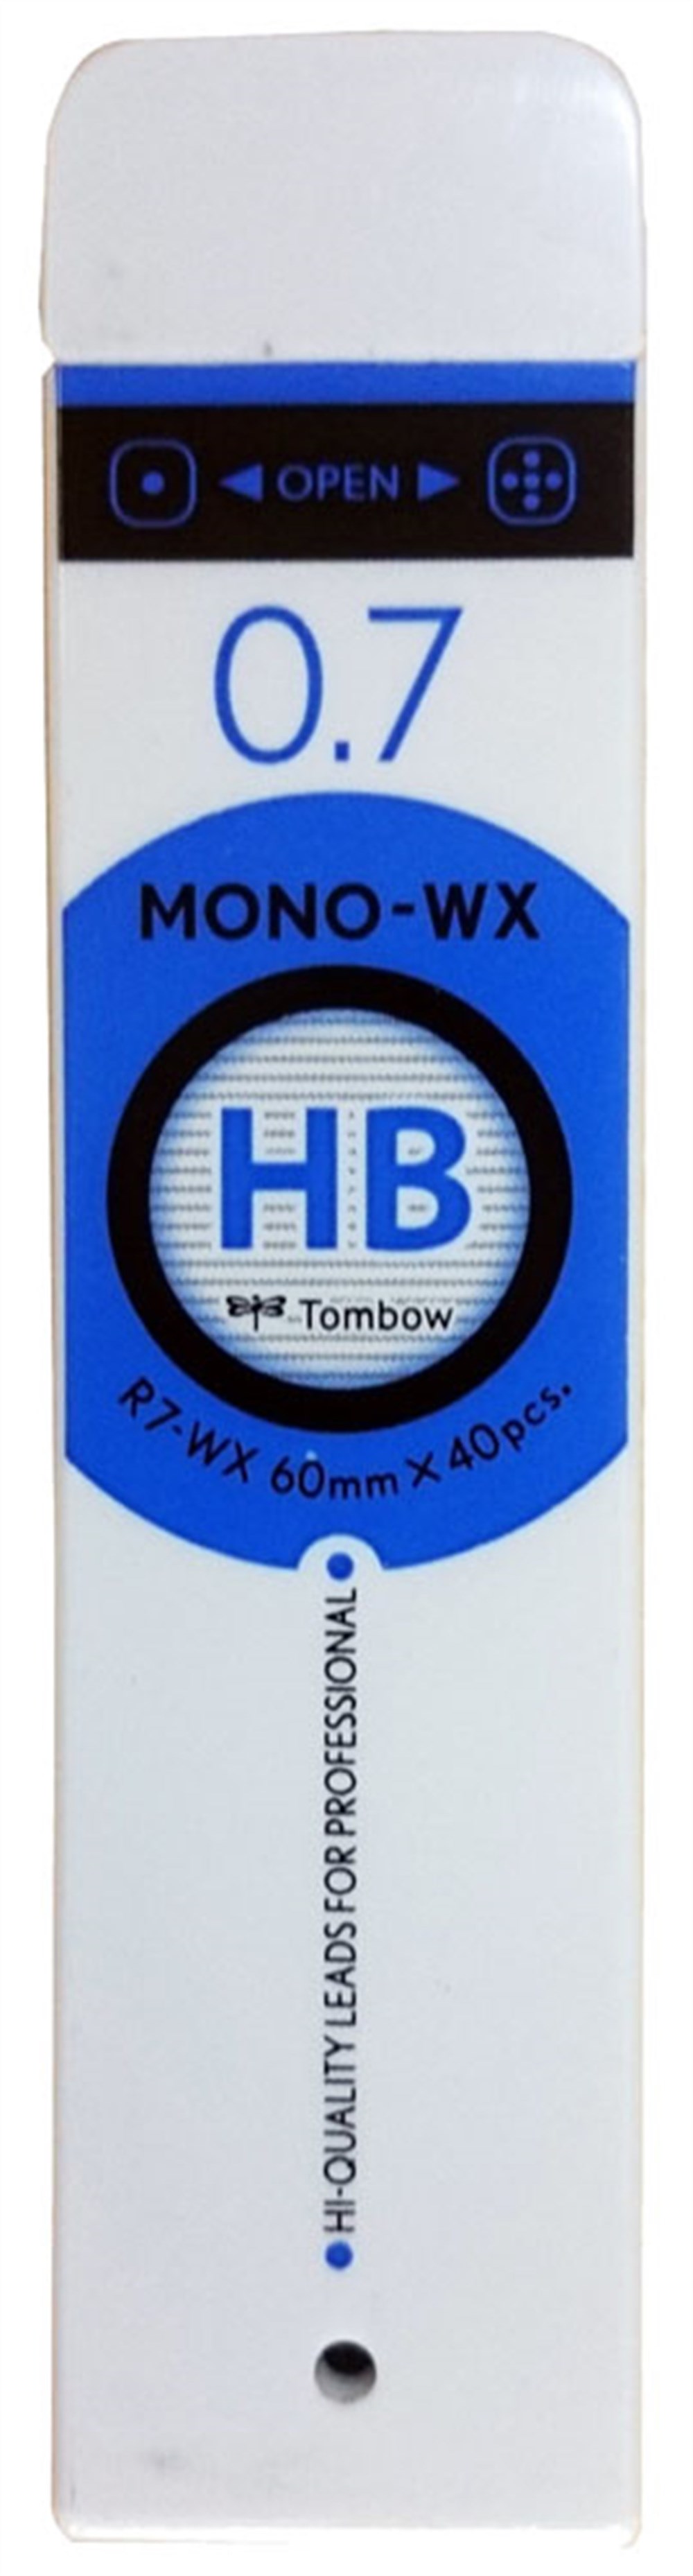 2B 0.5mm Mechanical Pencil Lead 40pcs Tombow Mono WX 